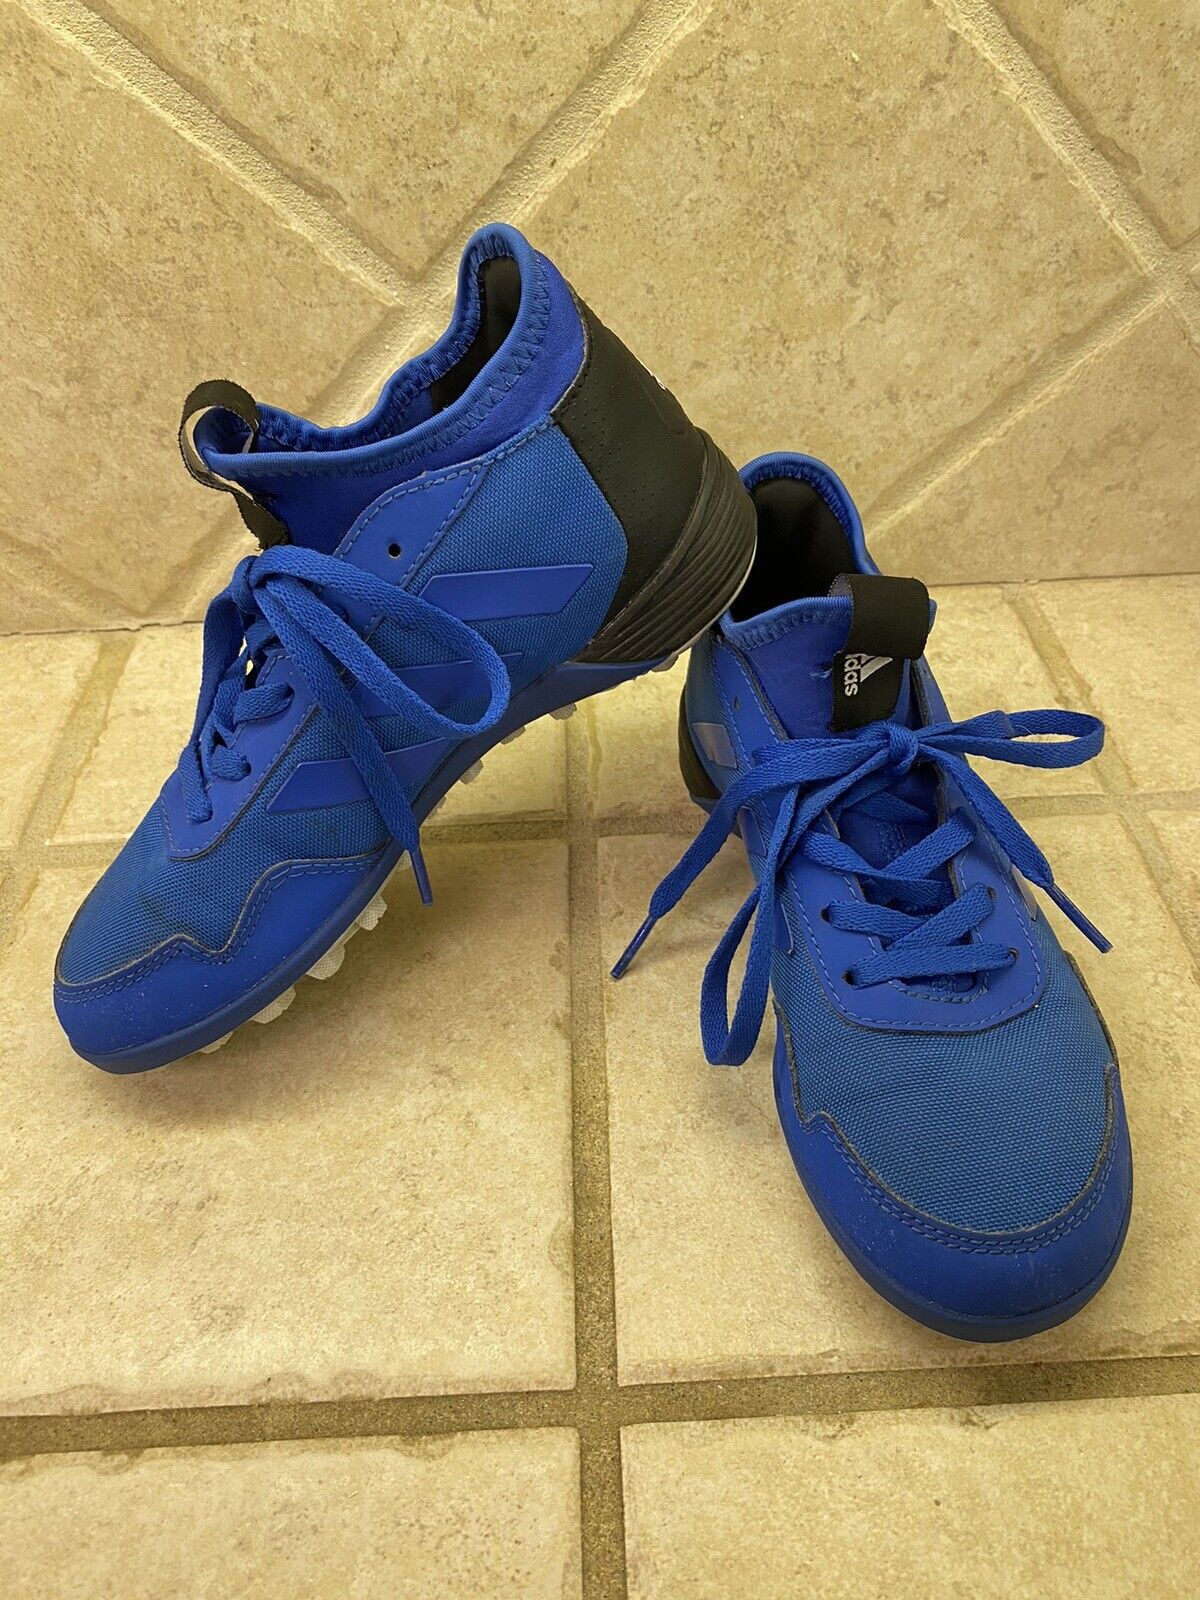 agua Nebu la licenciatura Adidas Ace Tango 17.2 Artificial Turf Youth Boys Soccer Shoes Size 2 Blue  EUC | eBay